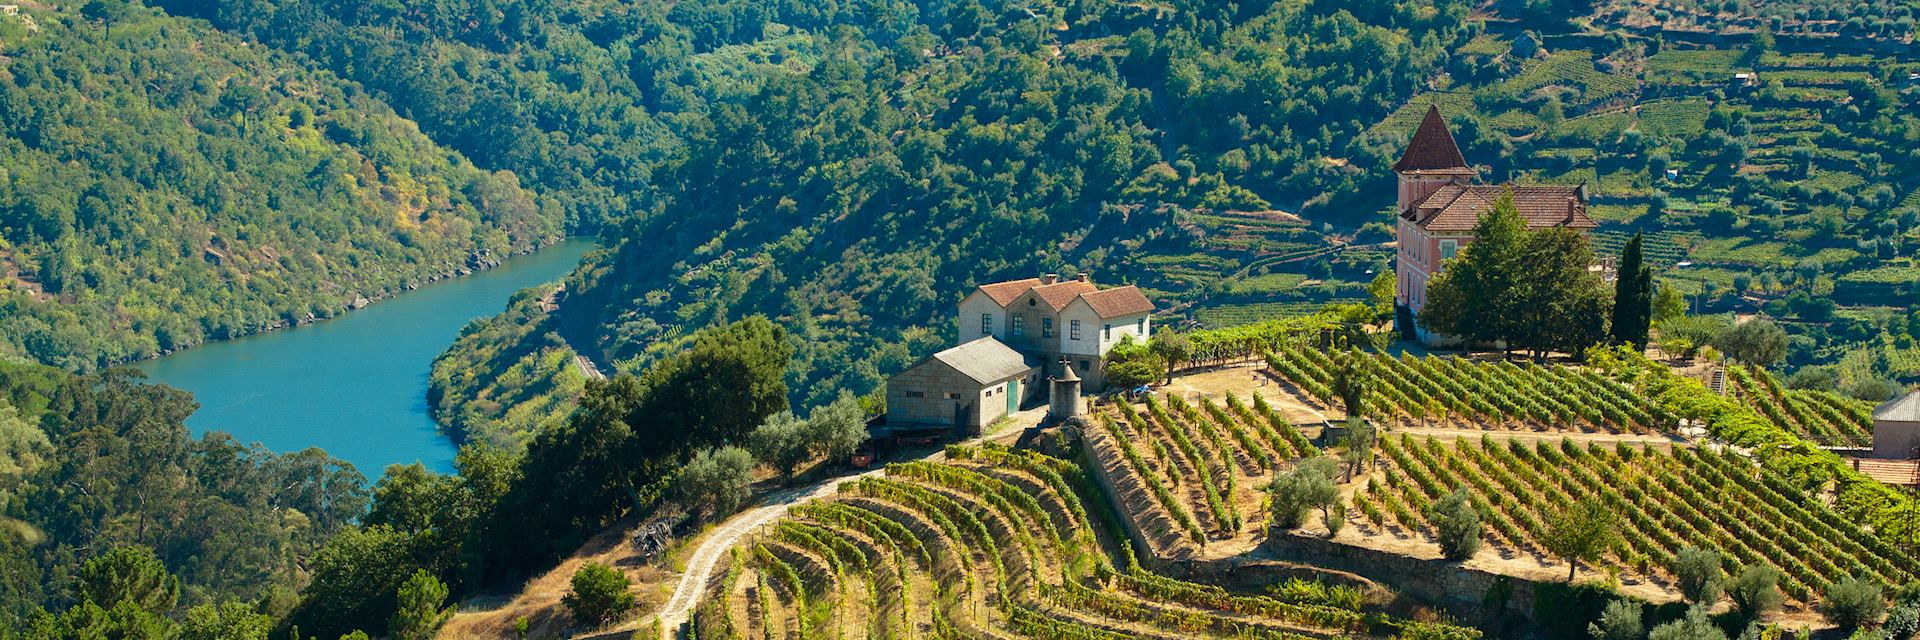 Vineyards, Douro Valley